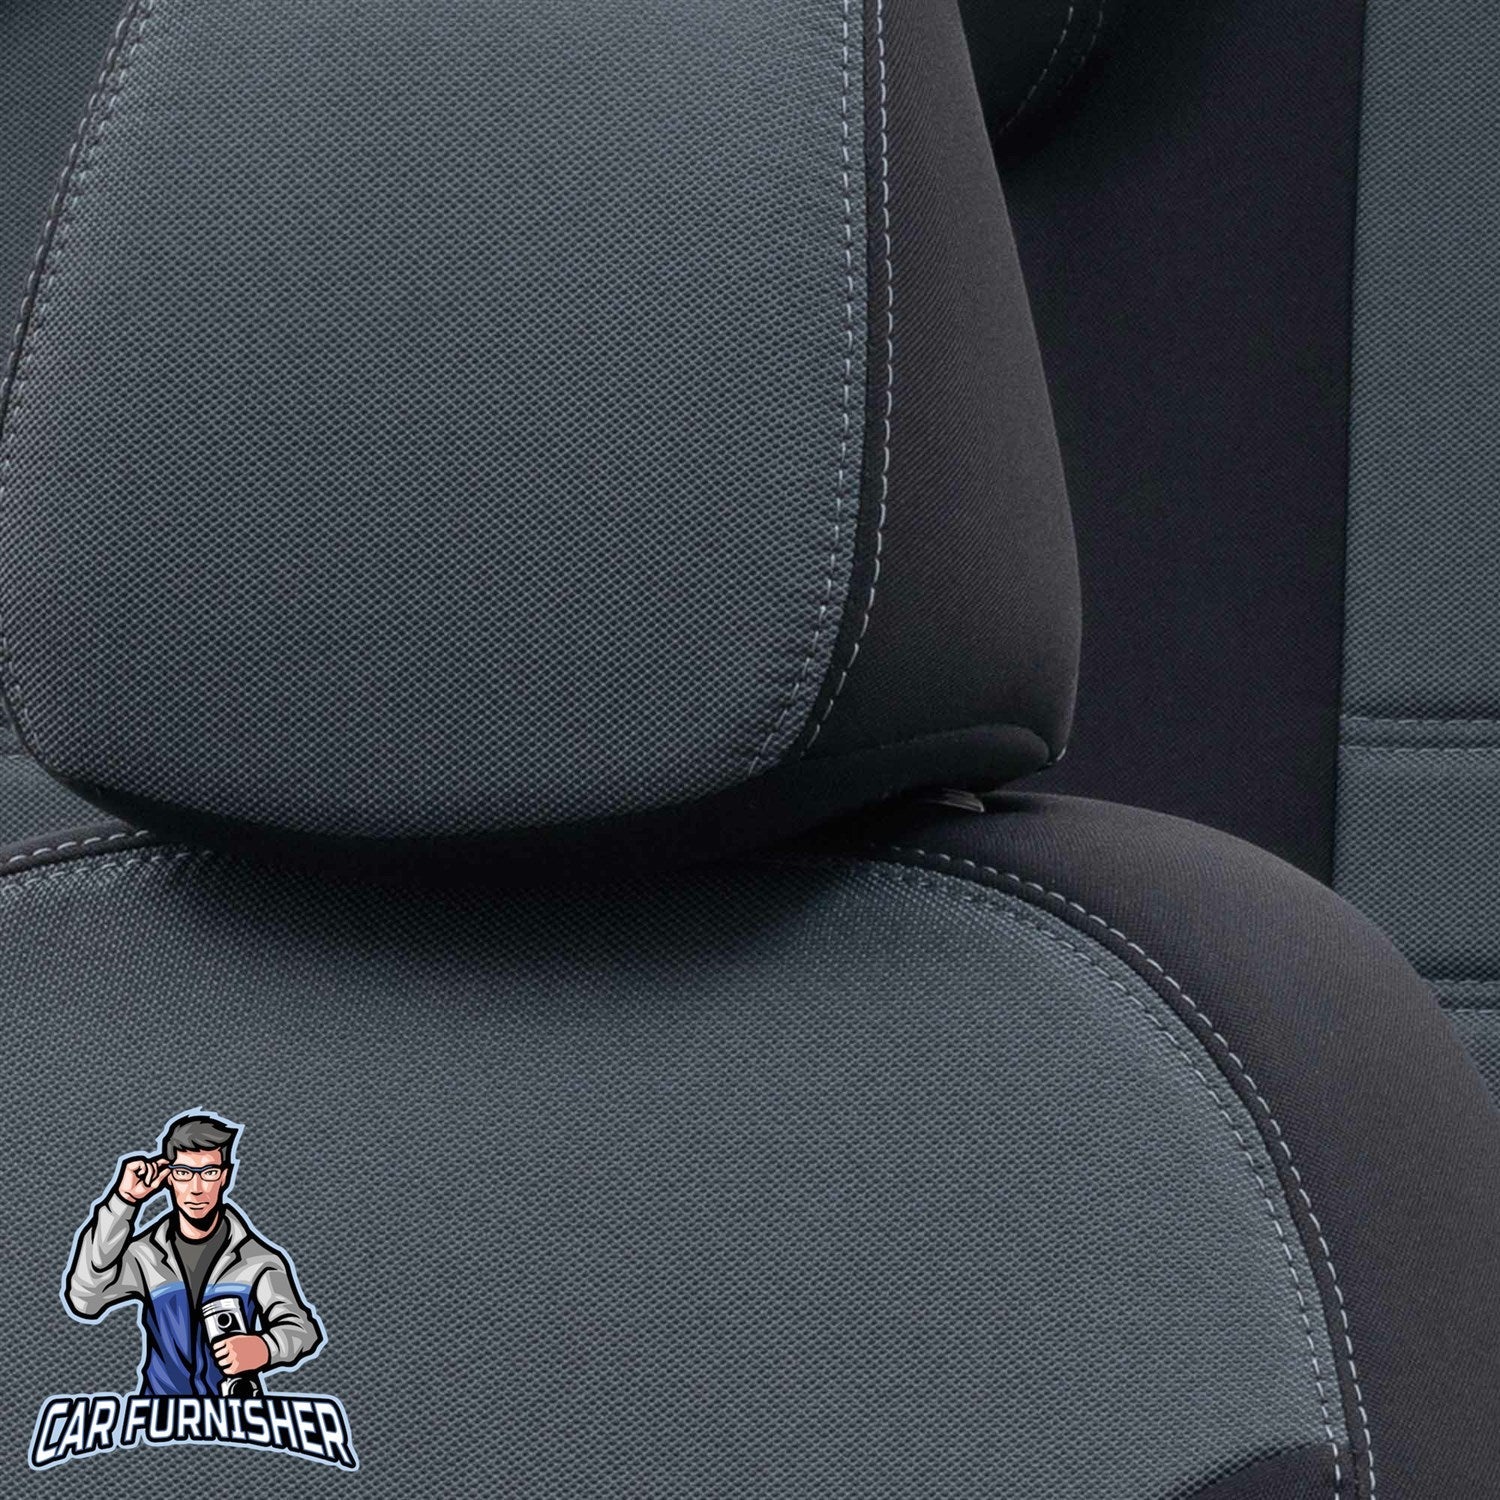 Mazda E2200 Seat Covers Original Jacquard Design Smoked Black Jacquard Fabric